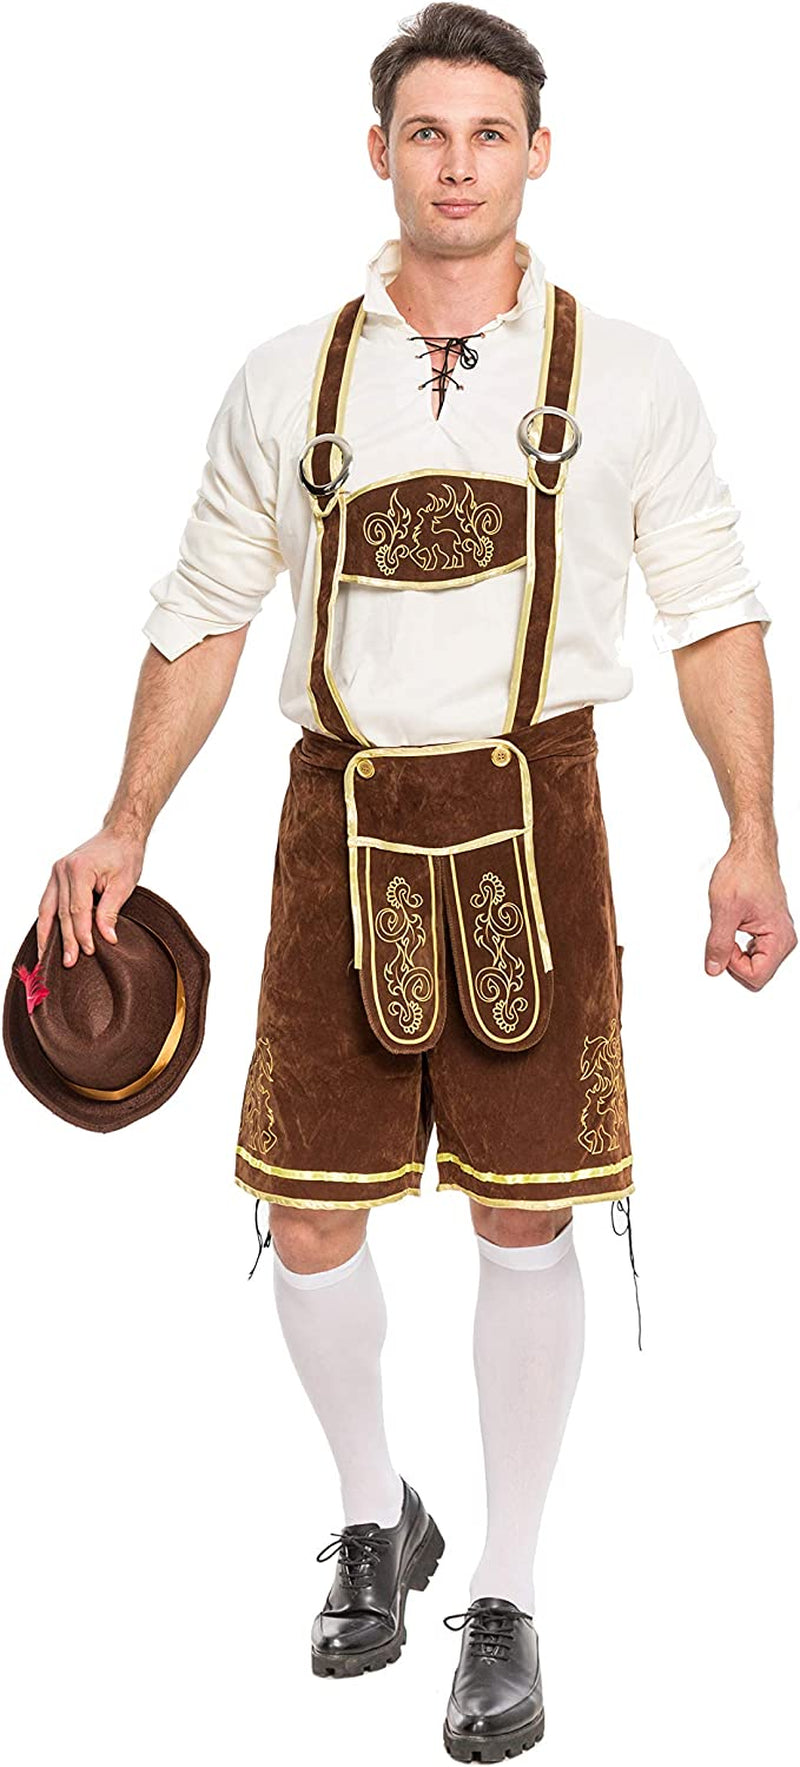 Spooktacular Creations Men’S German Bavarian Oktoberfest Costume Set for Halloween Dress up Party and Beer Festival  Spooktacular Creations   